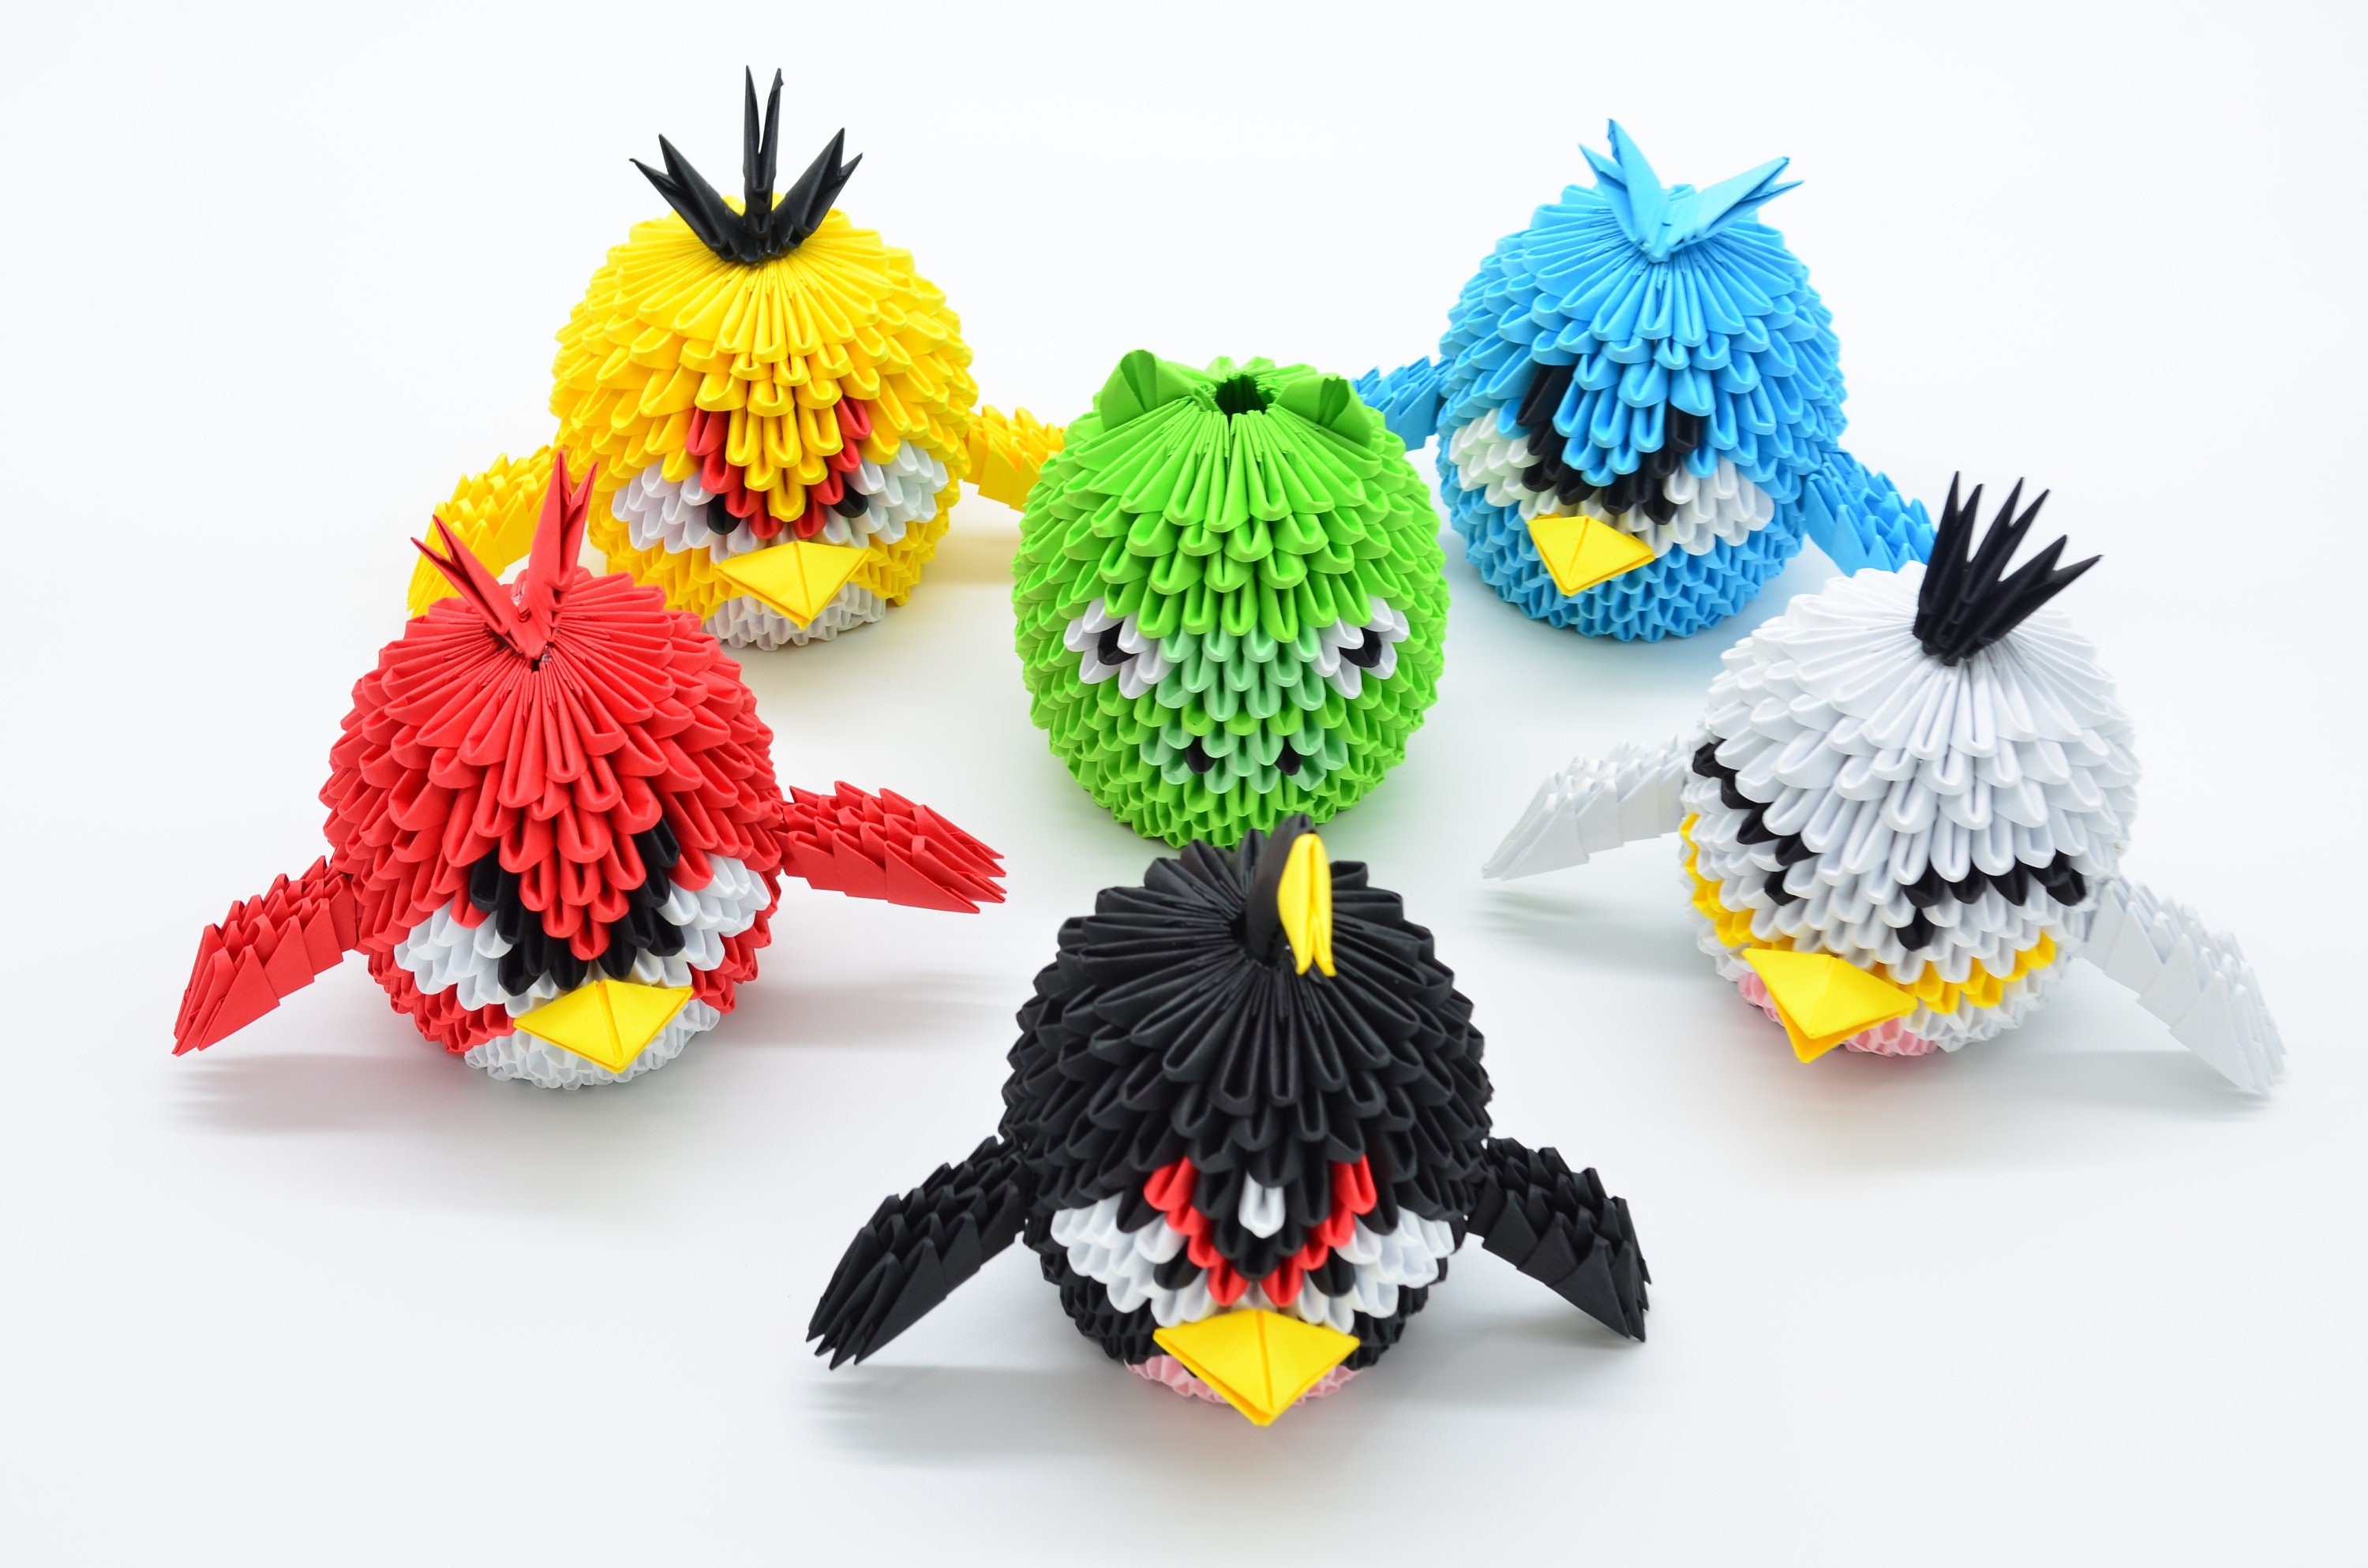 3D DIY Modular Origami Kit Chickling Paper Gift Decoration Craft Adult Kids